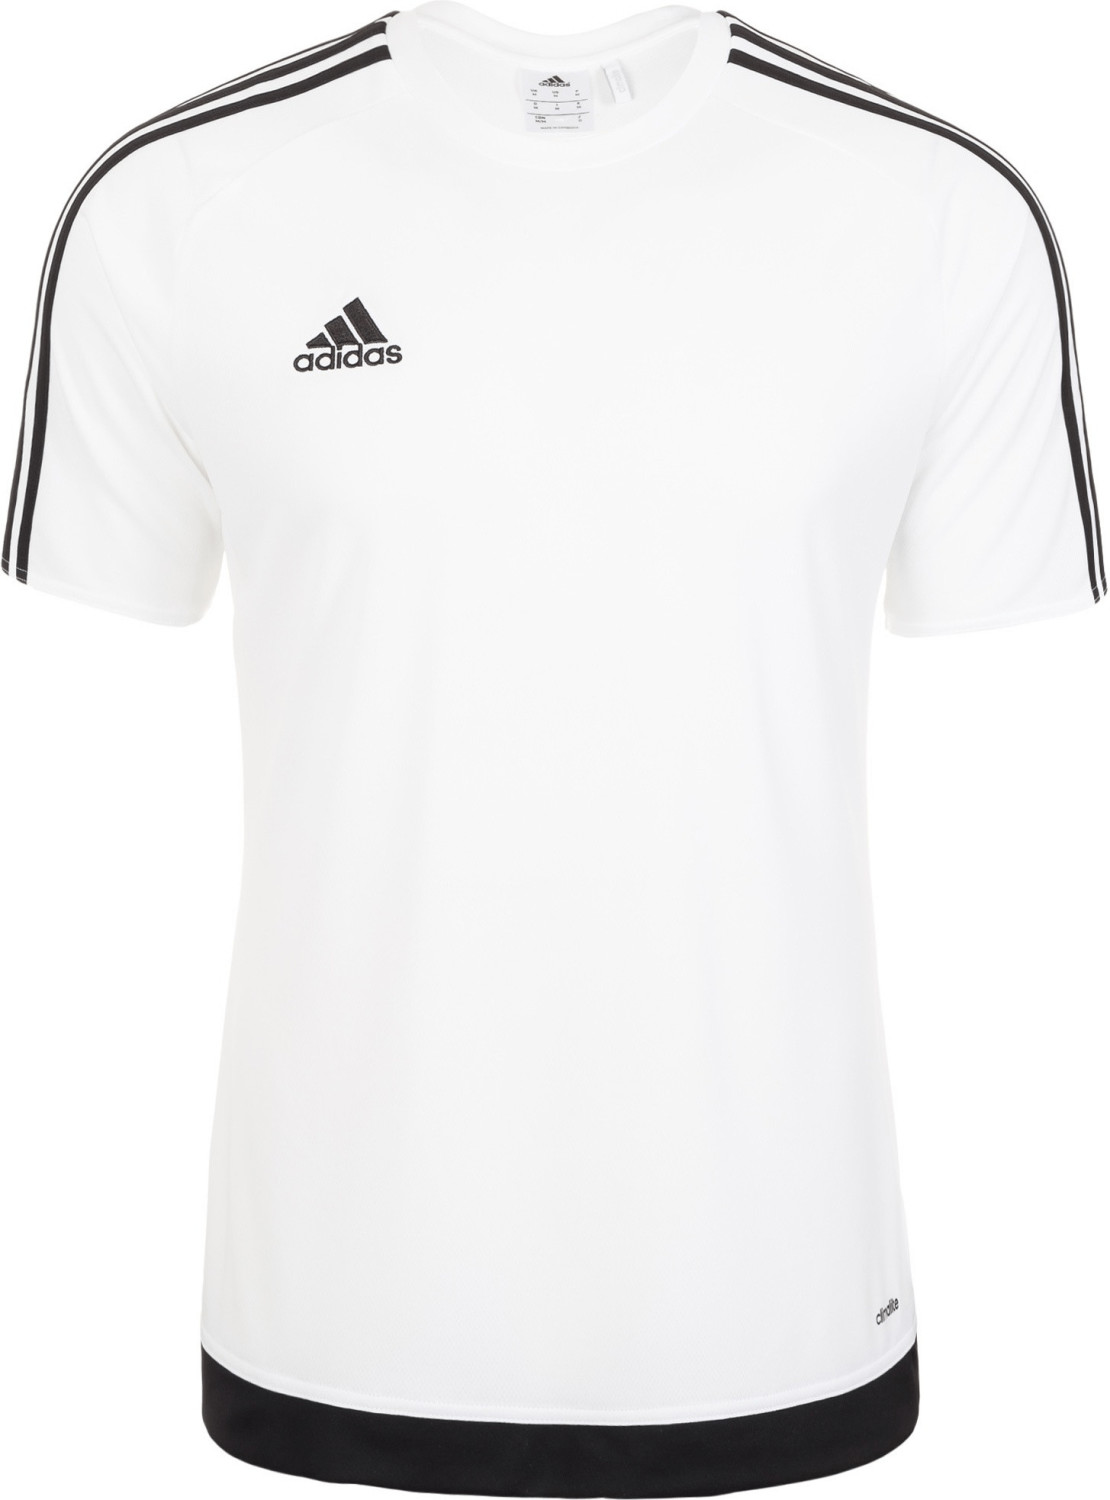 Adidas Estro 15 Jersey white/black